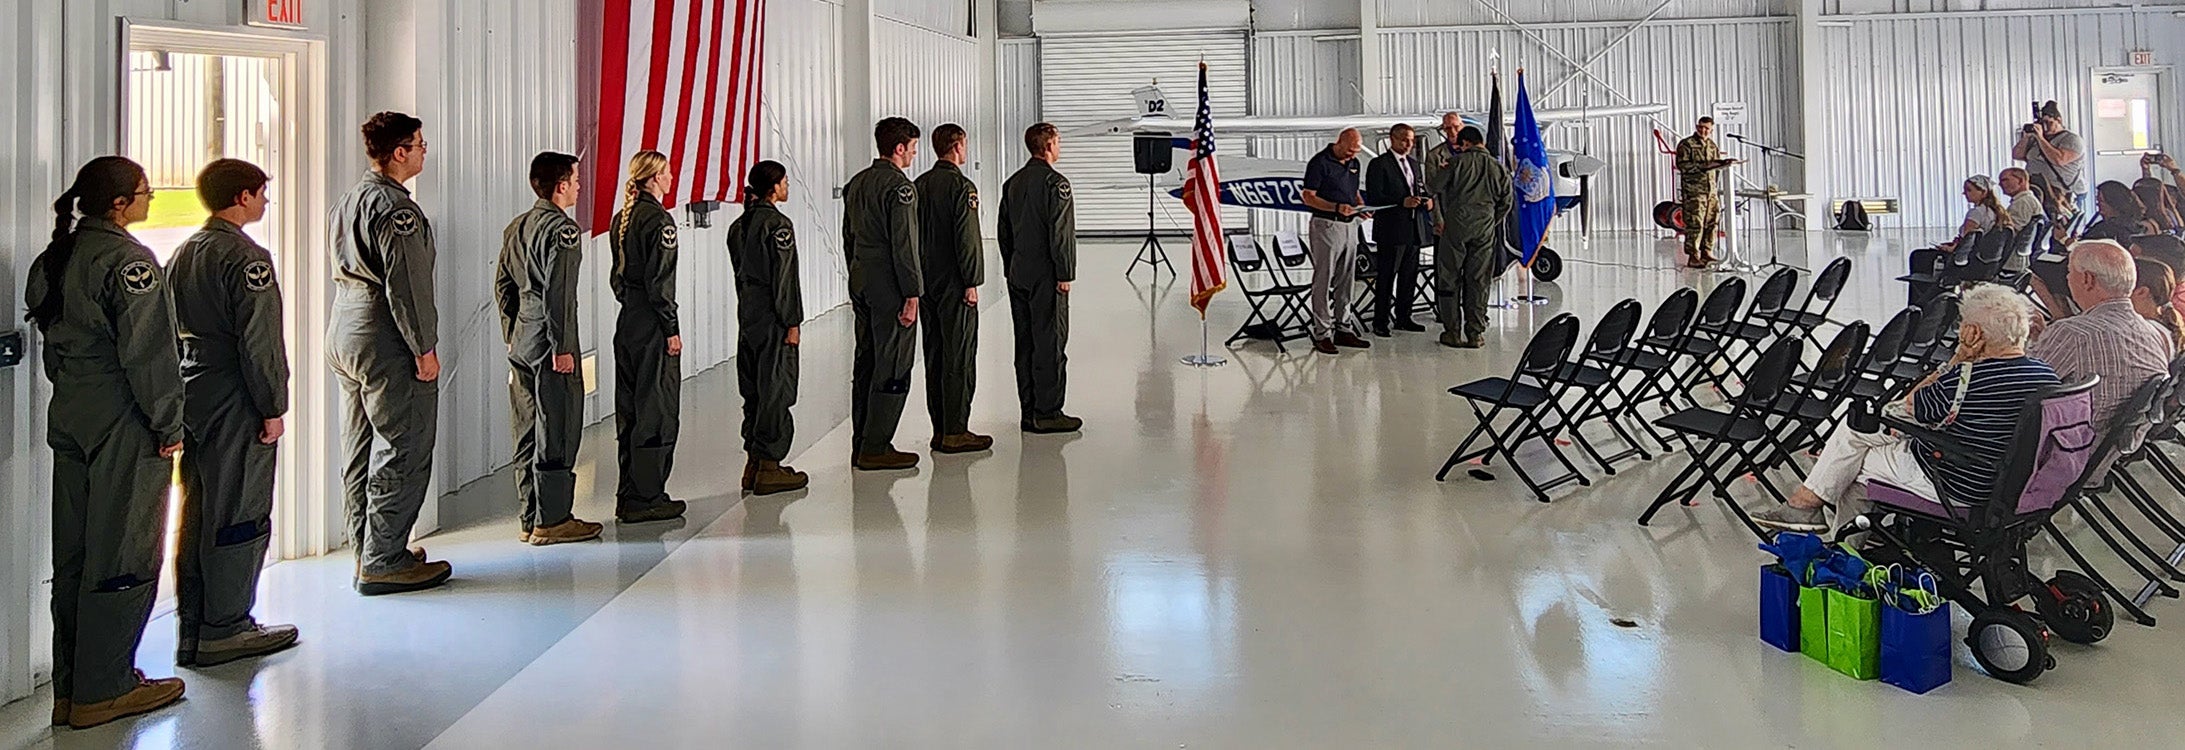 Air Force Junior ROTC Flight Academy graduation ceremony. (Contributed photo)